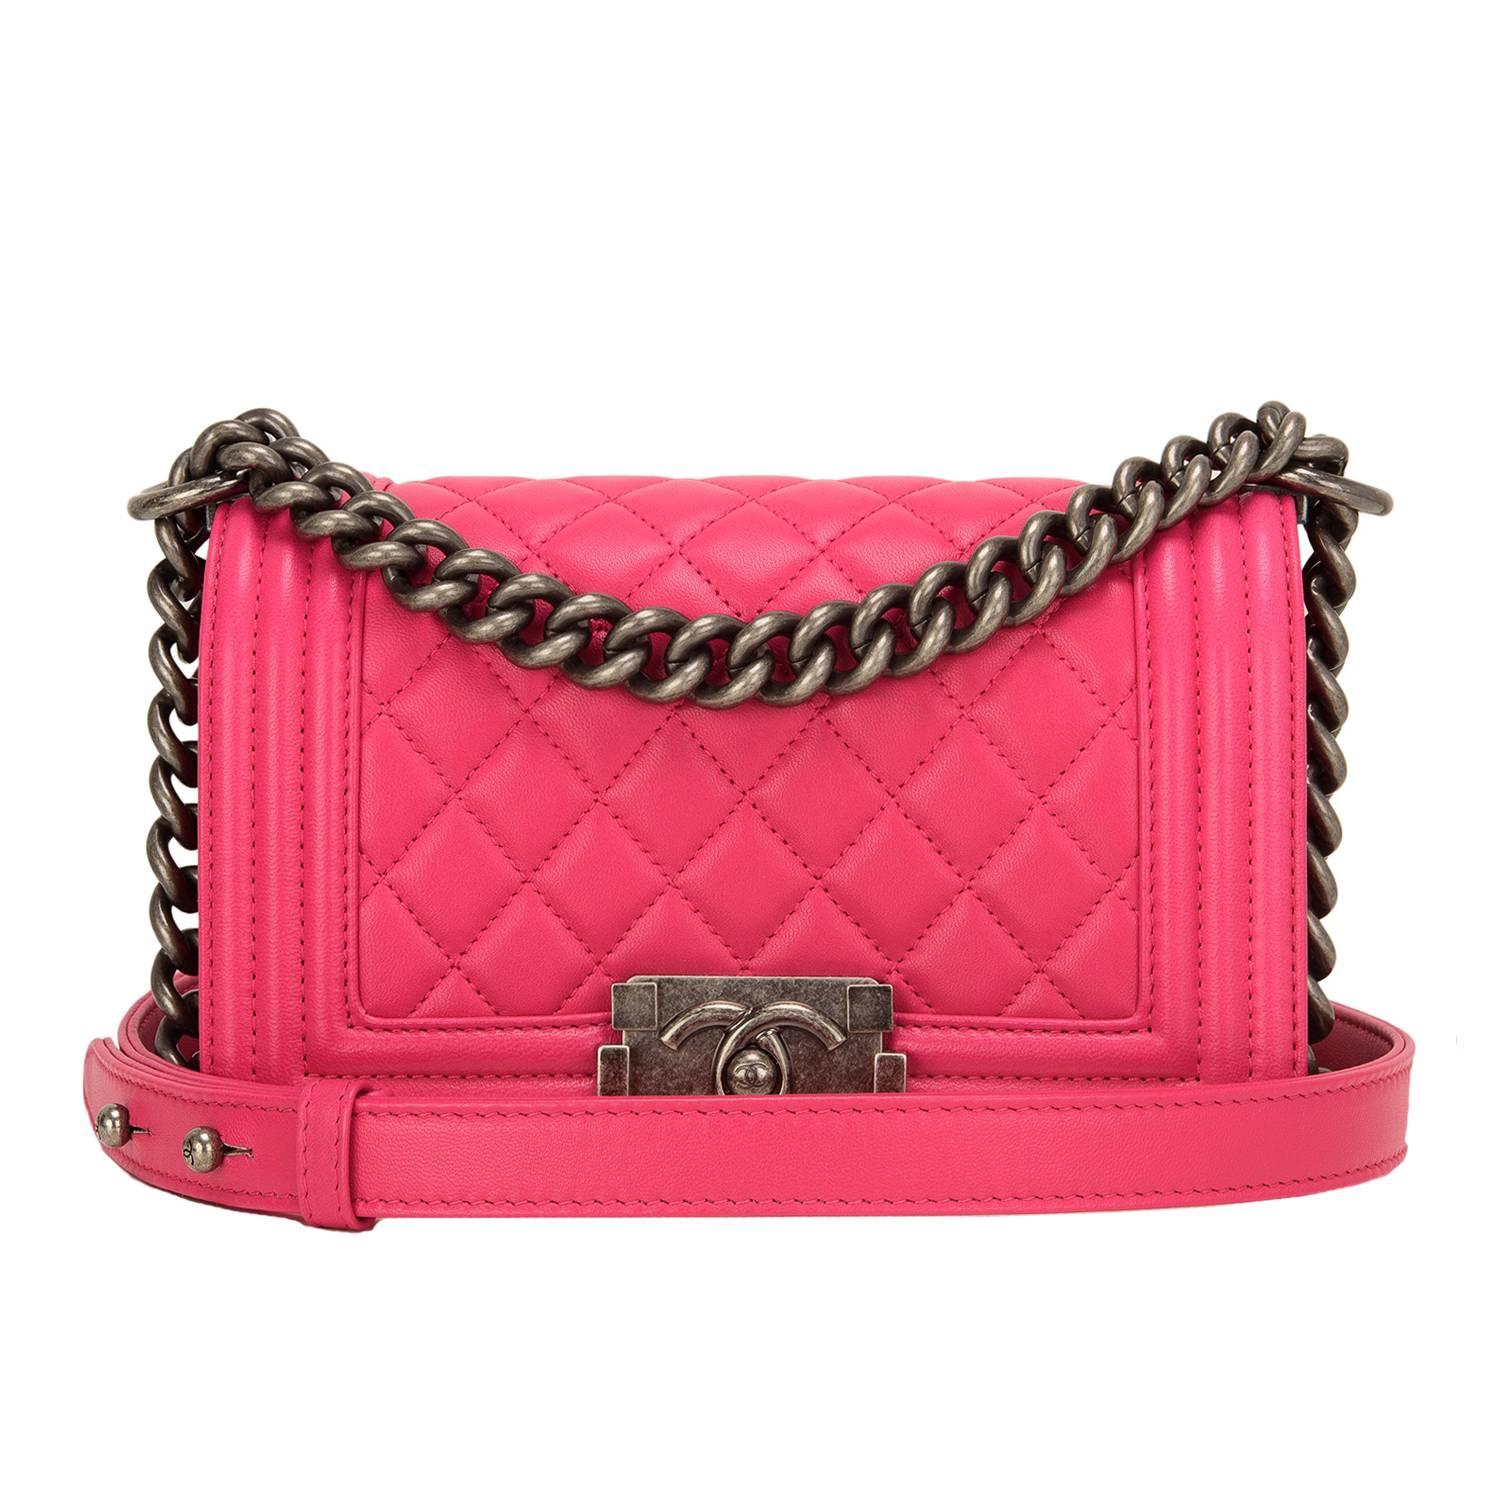 Chanel Fuchsia Pink Lambskin Small Boy Bag